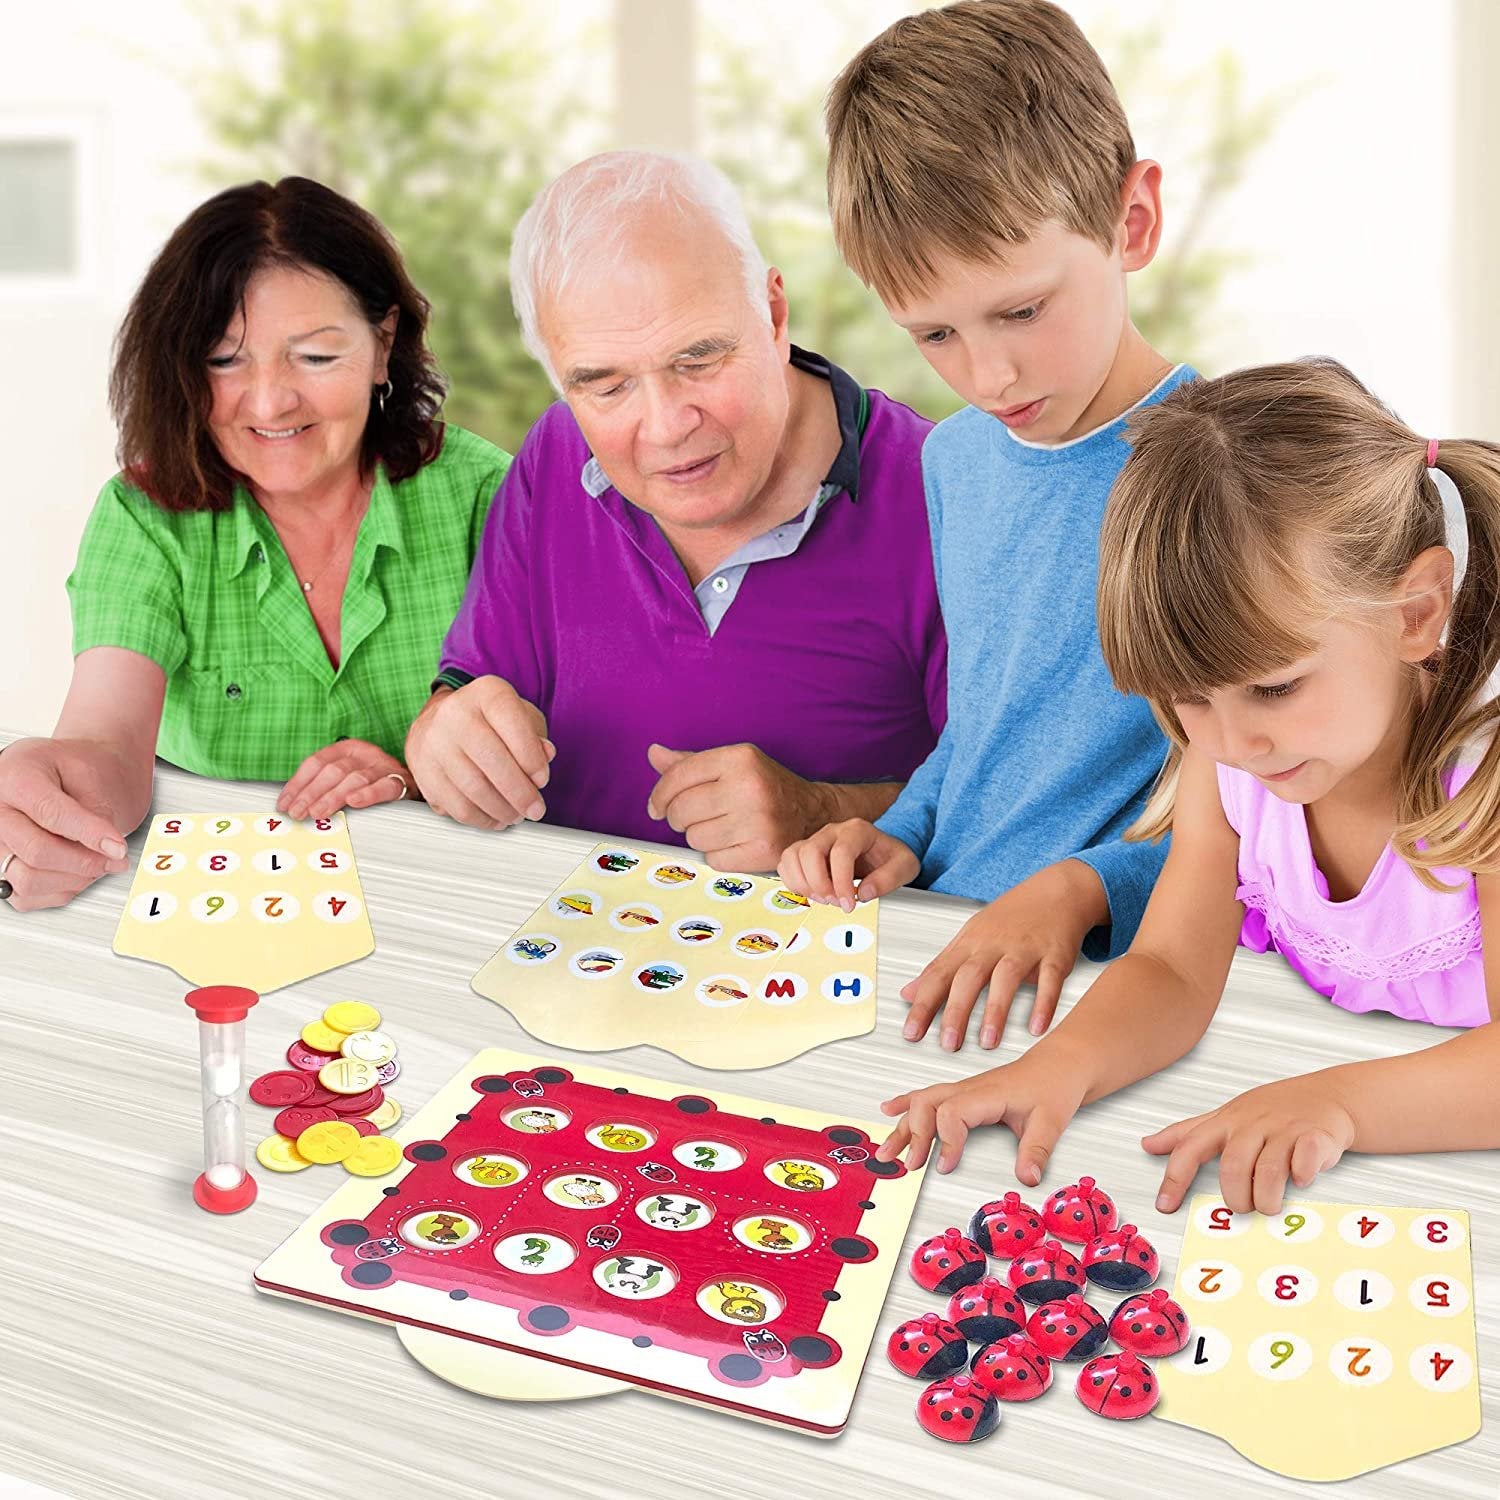 Ladybug Memory Matching Game for Kids - 8 Educational Match Games